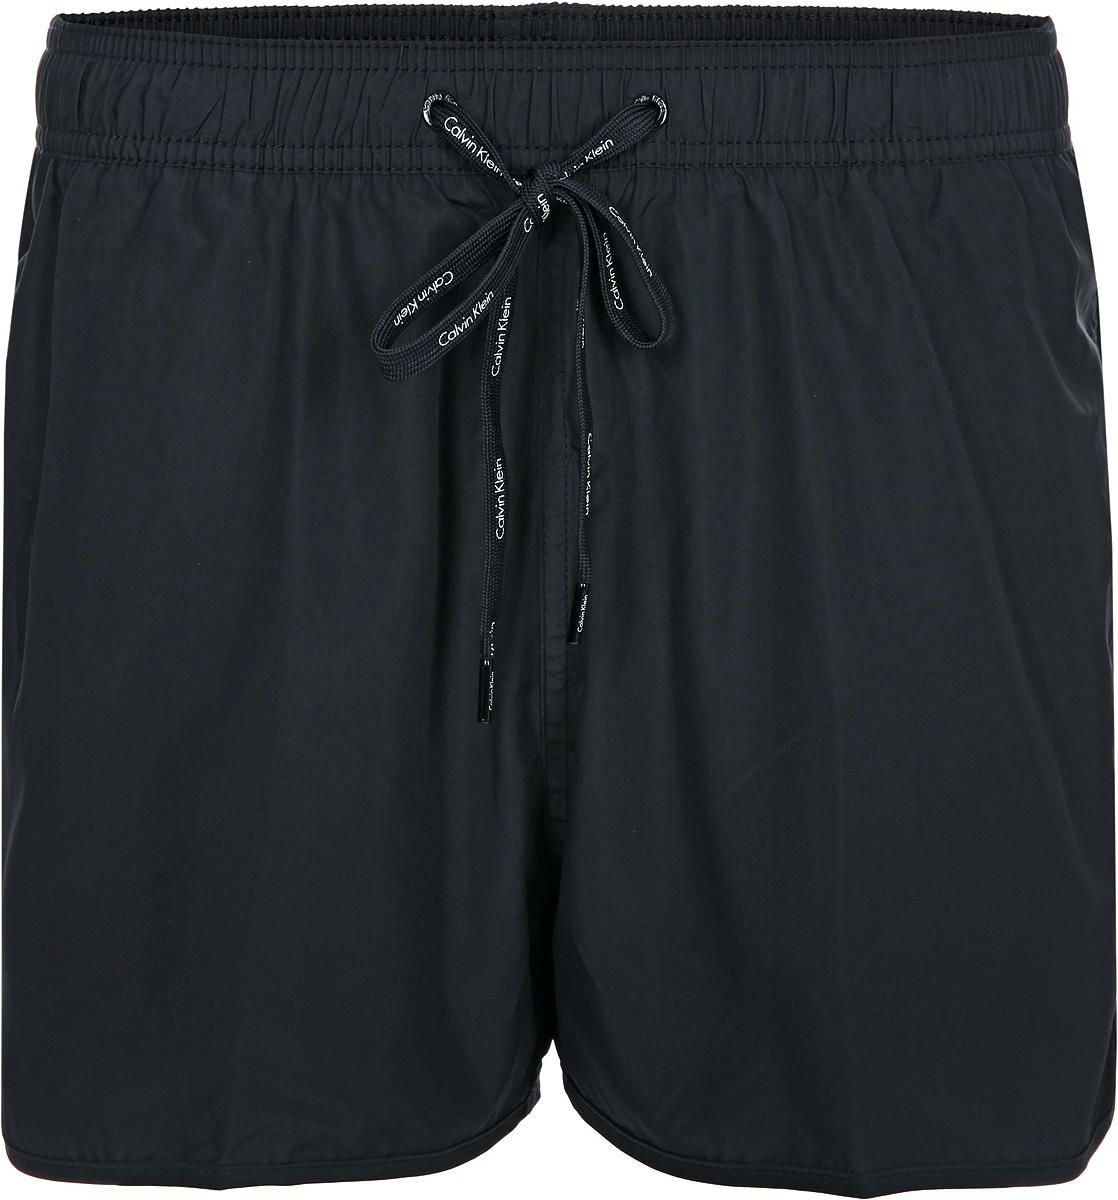 Шорты для плавания мужские Calvin Klein Underwear, цвет: черный. KM0KM00179_001. Размер M (50)